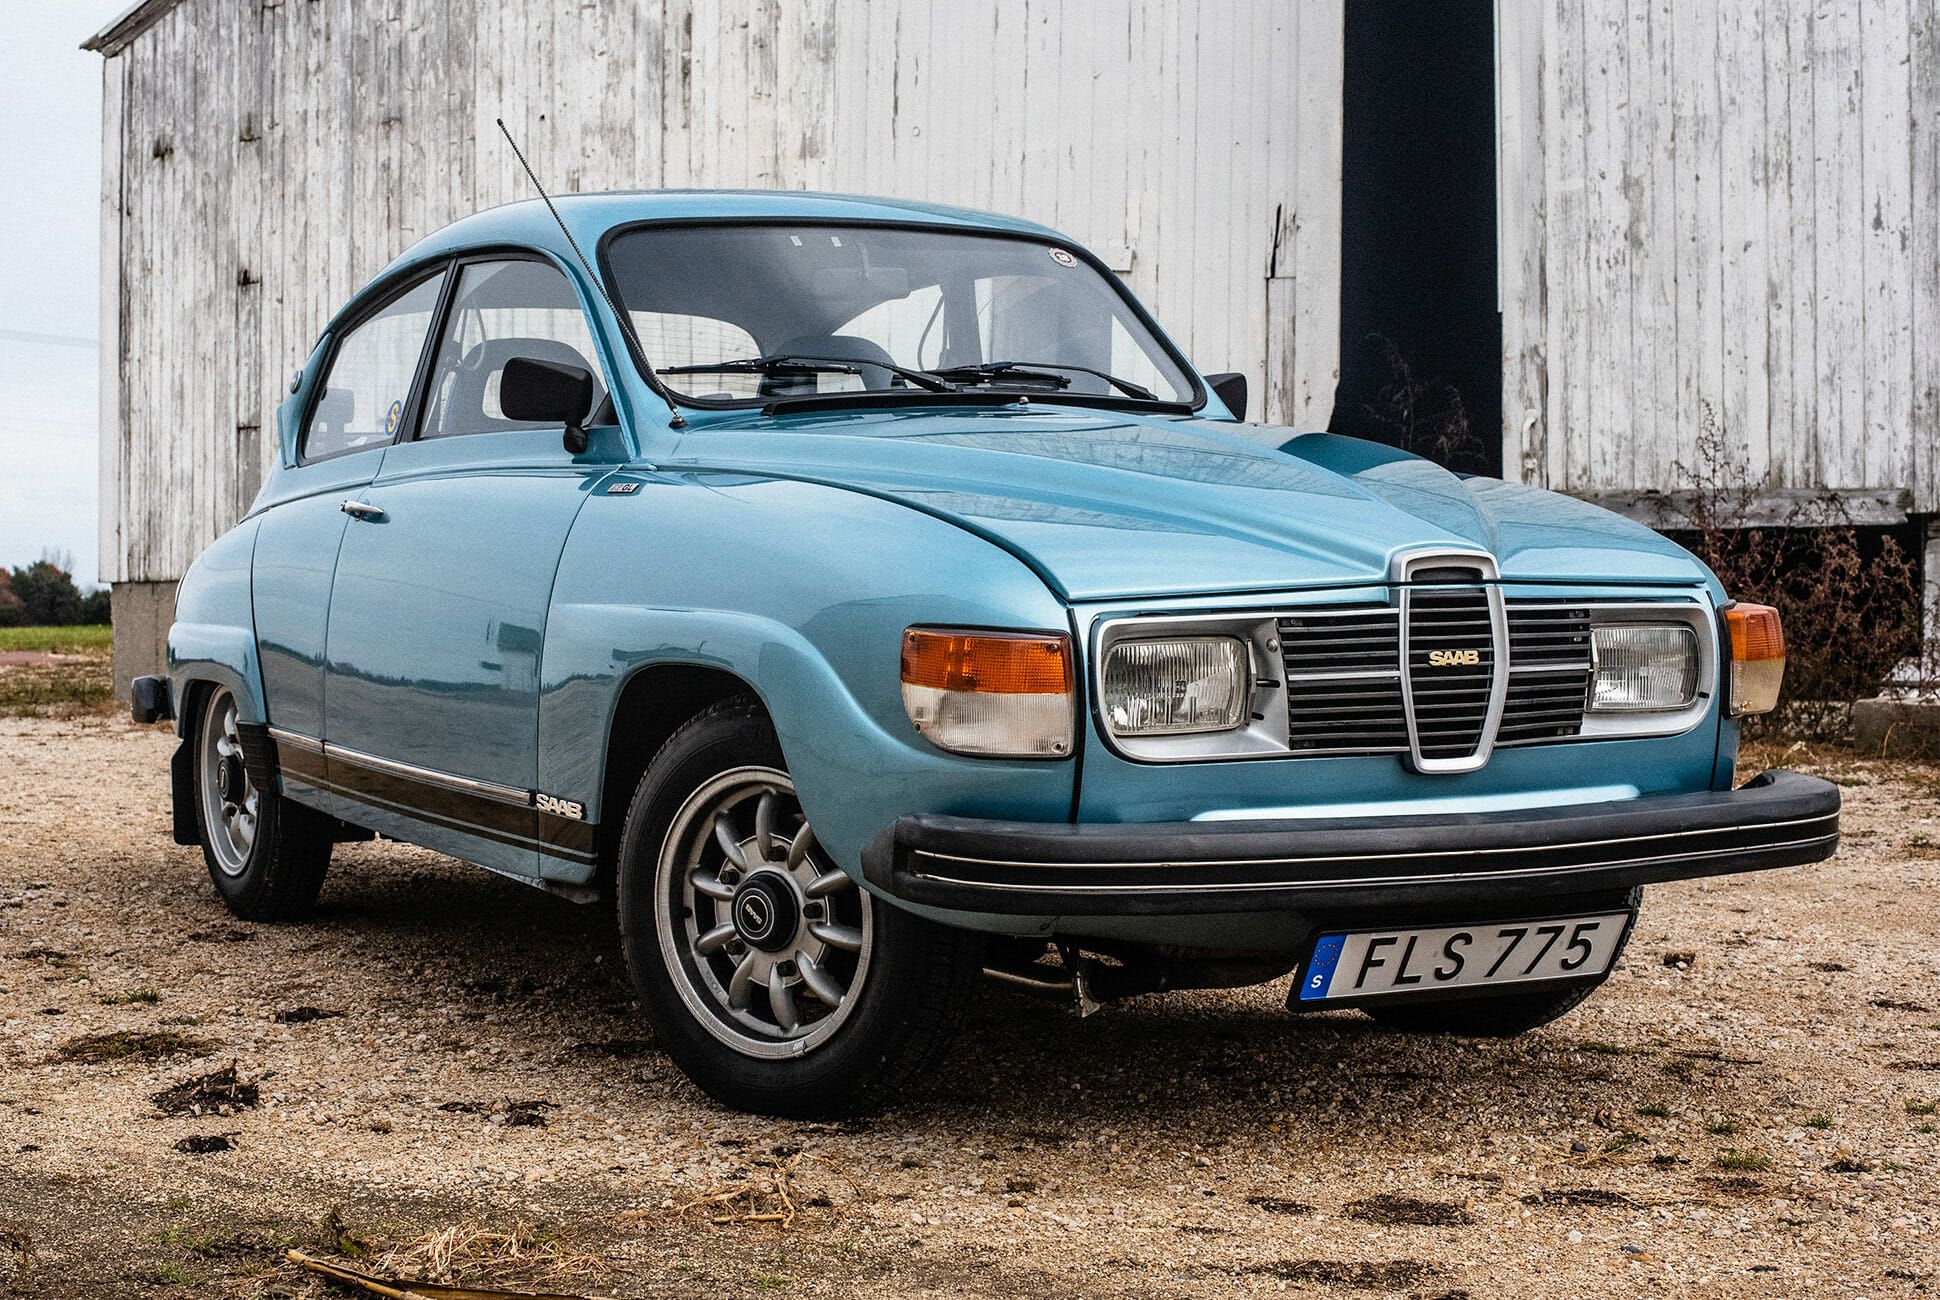 A Vintage Car You Should Know: Saab